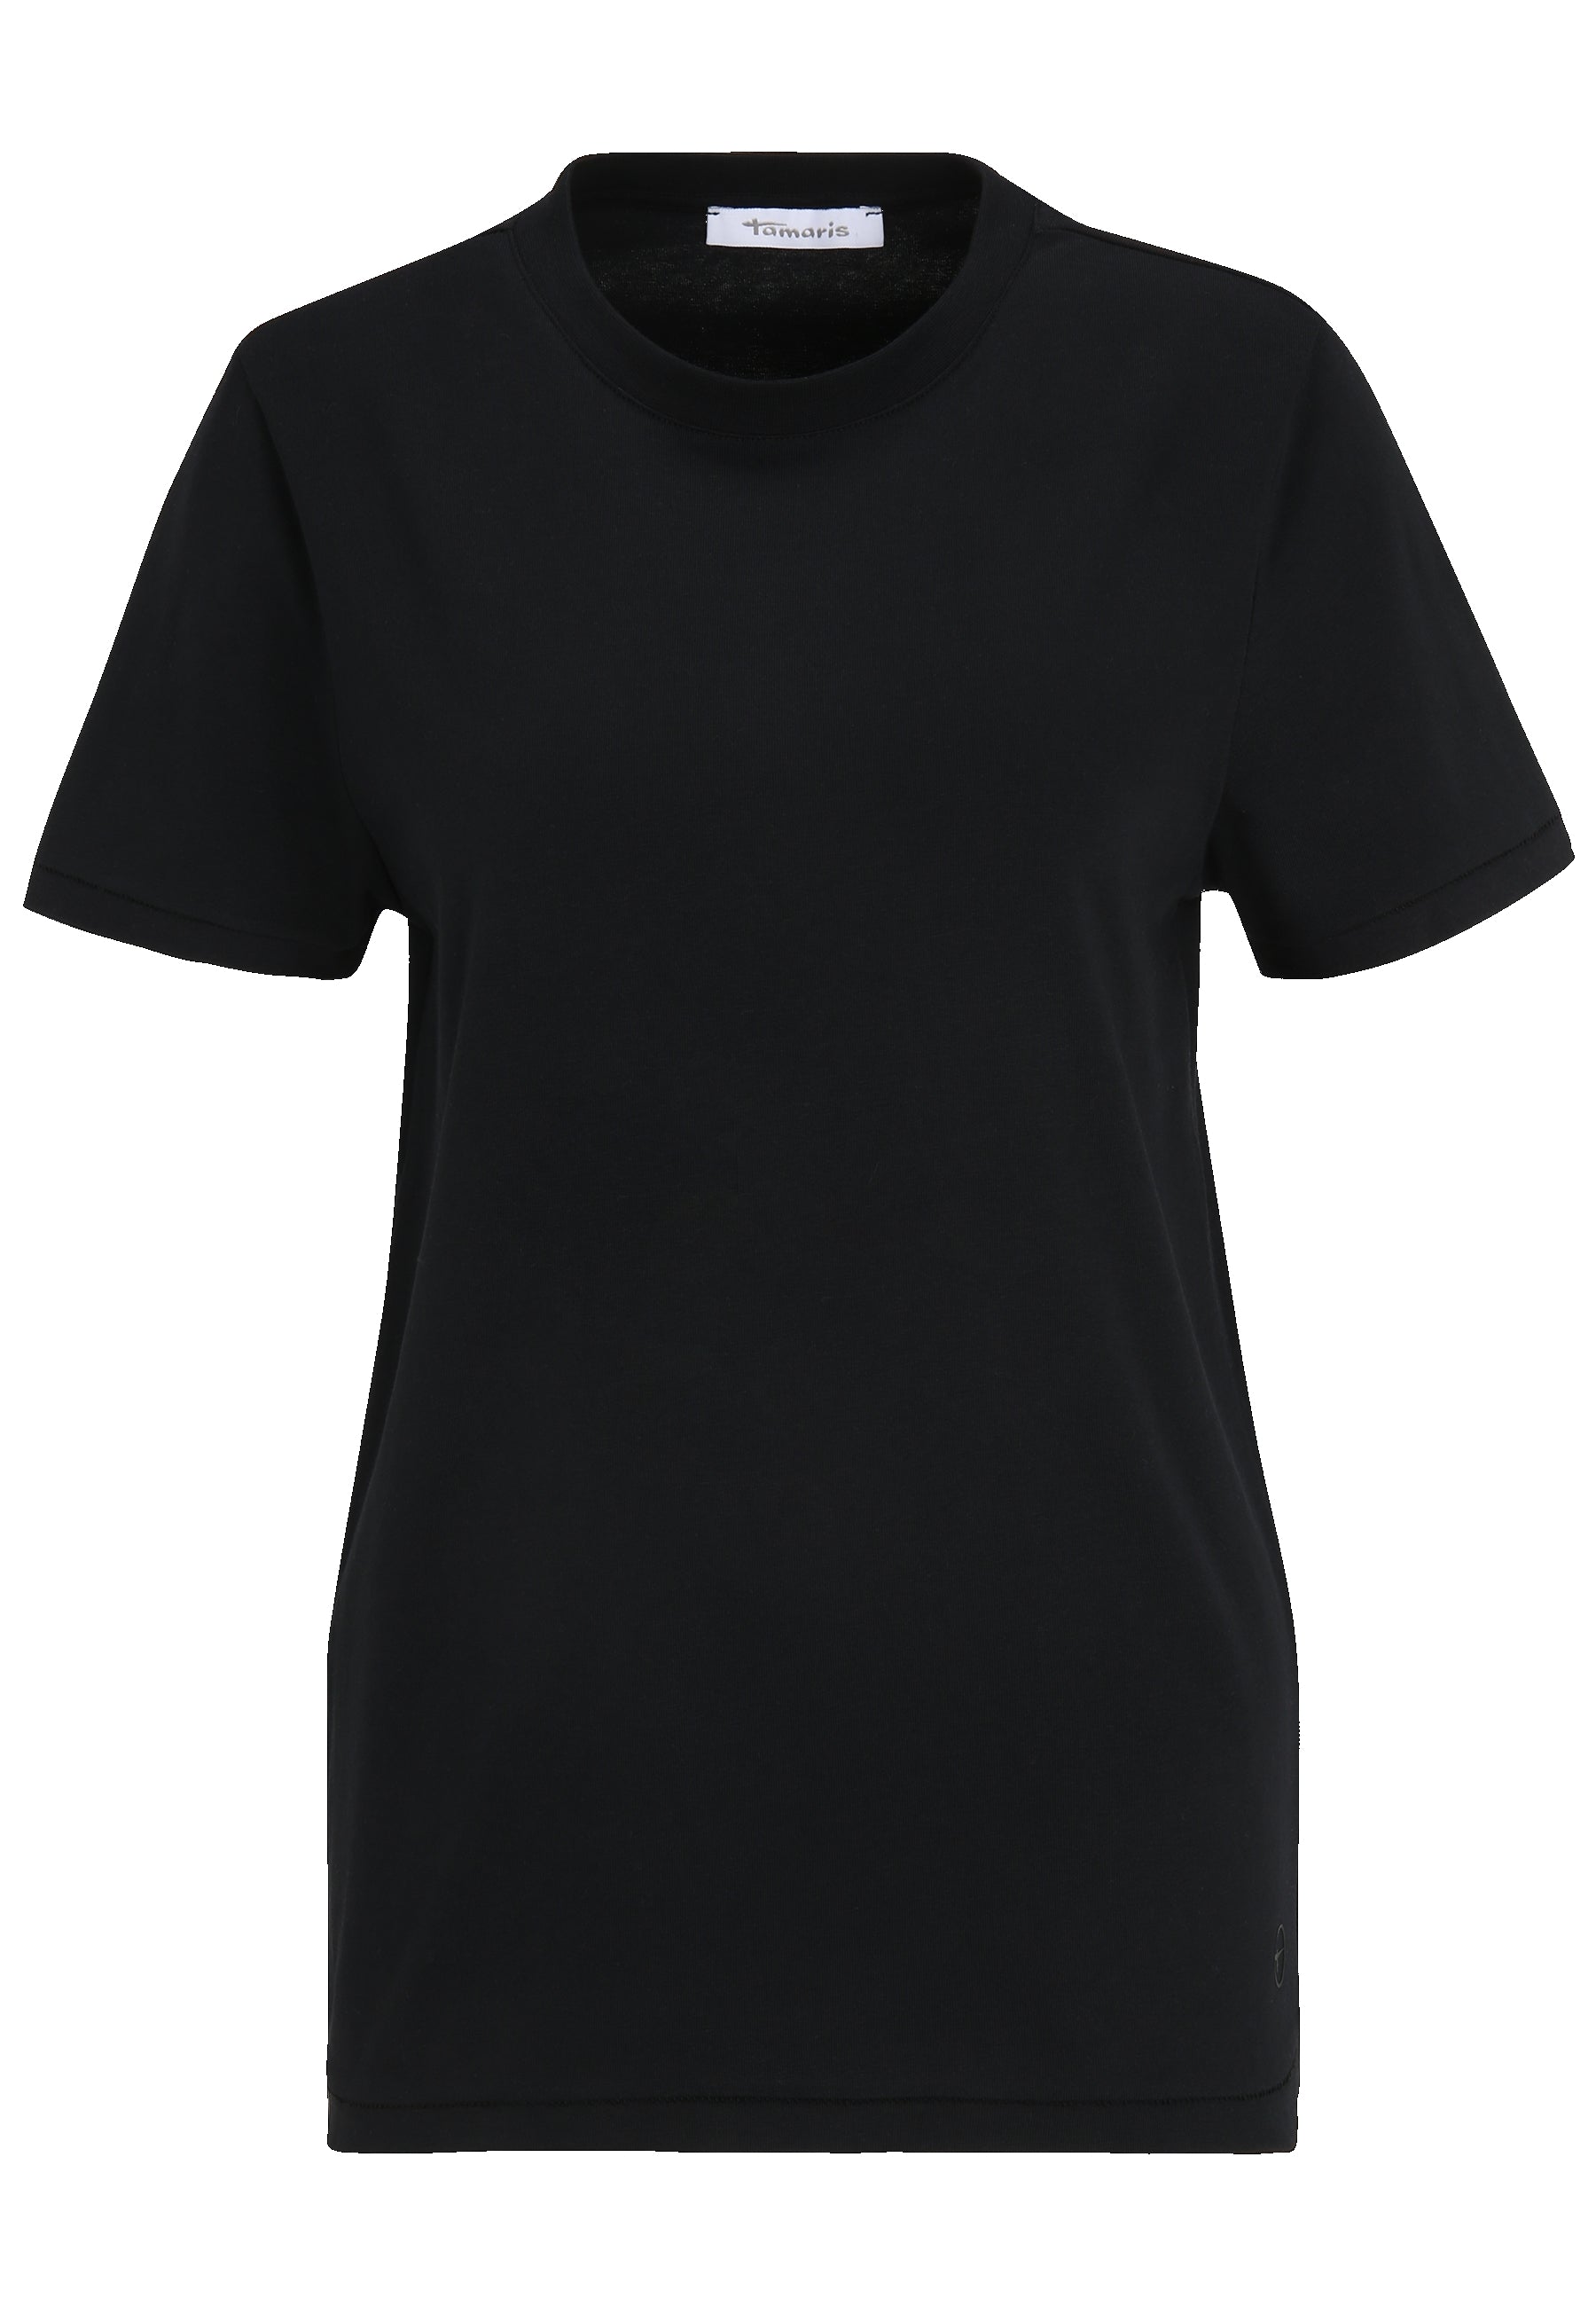 Adria Round Neck Plain Tee in Black Beauty T-Shirts Tamaris   